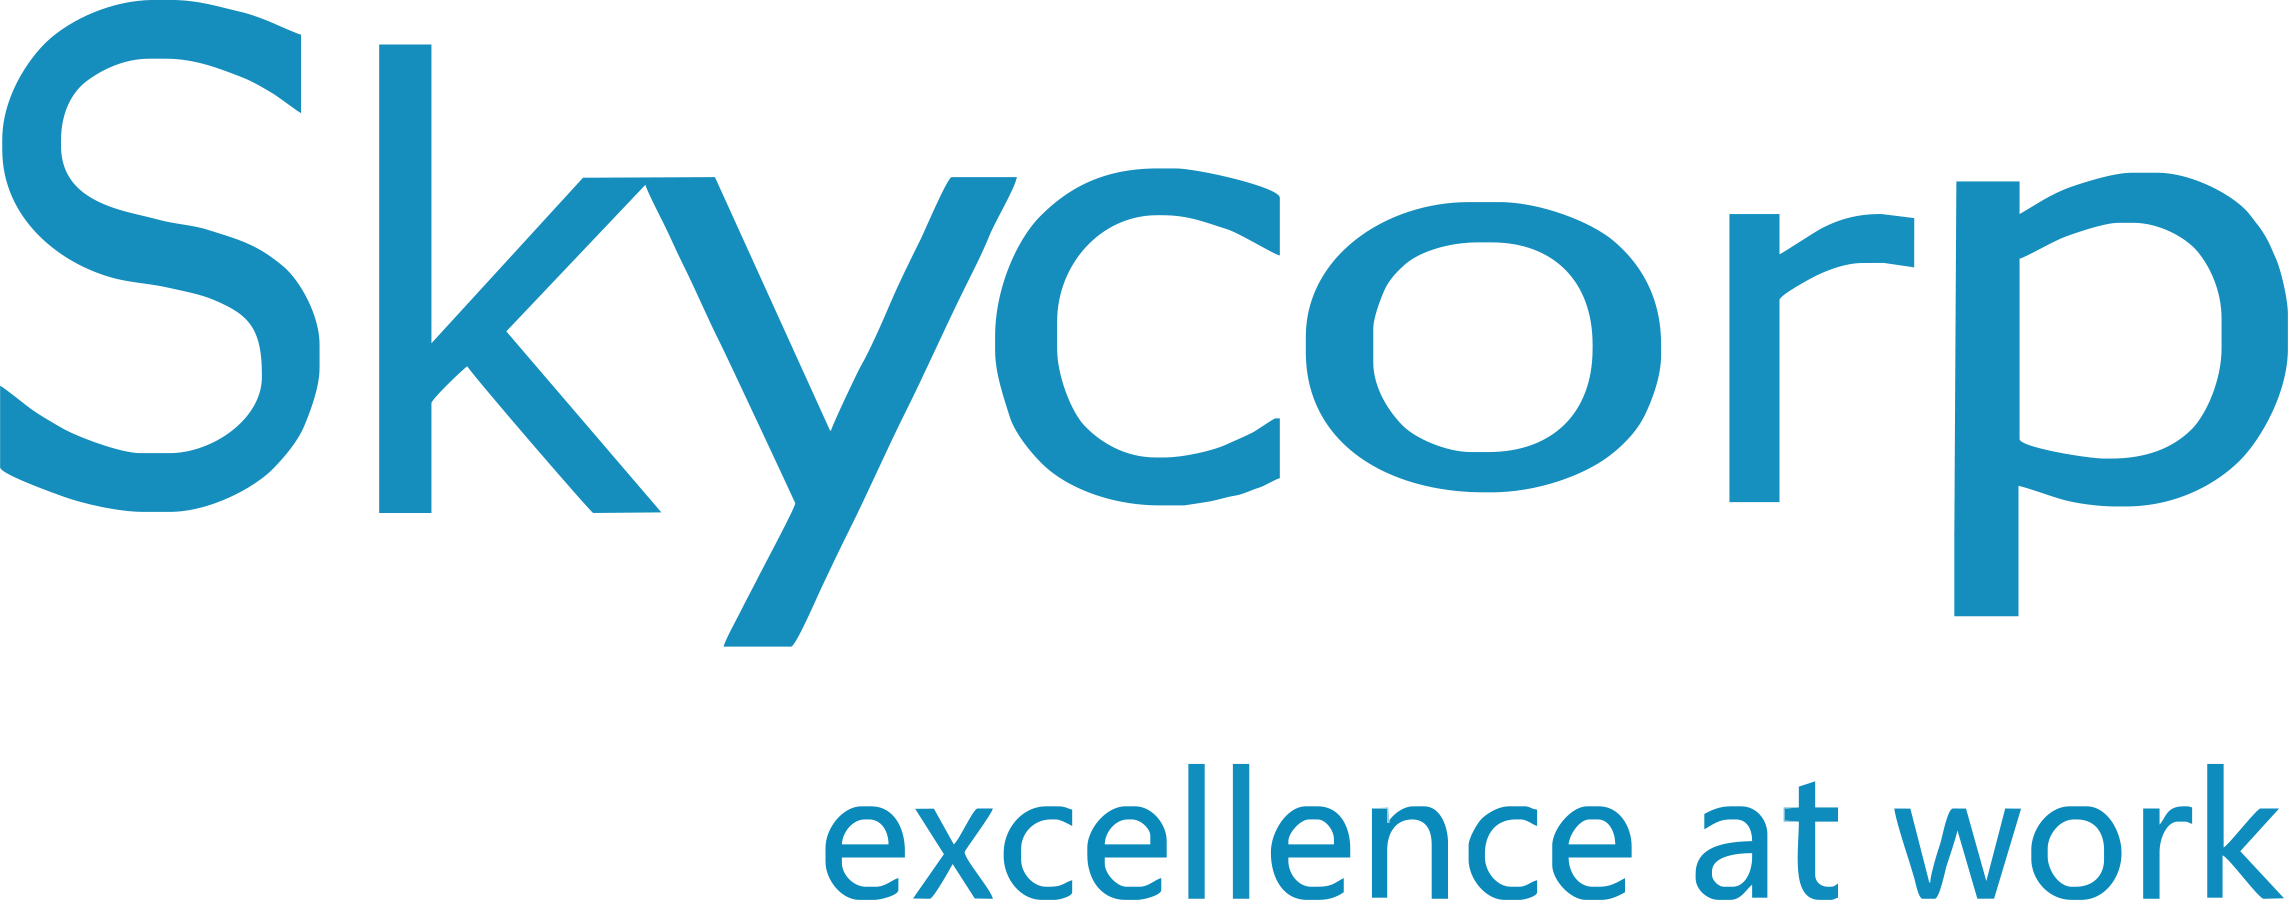 skycorp-logo (NB)